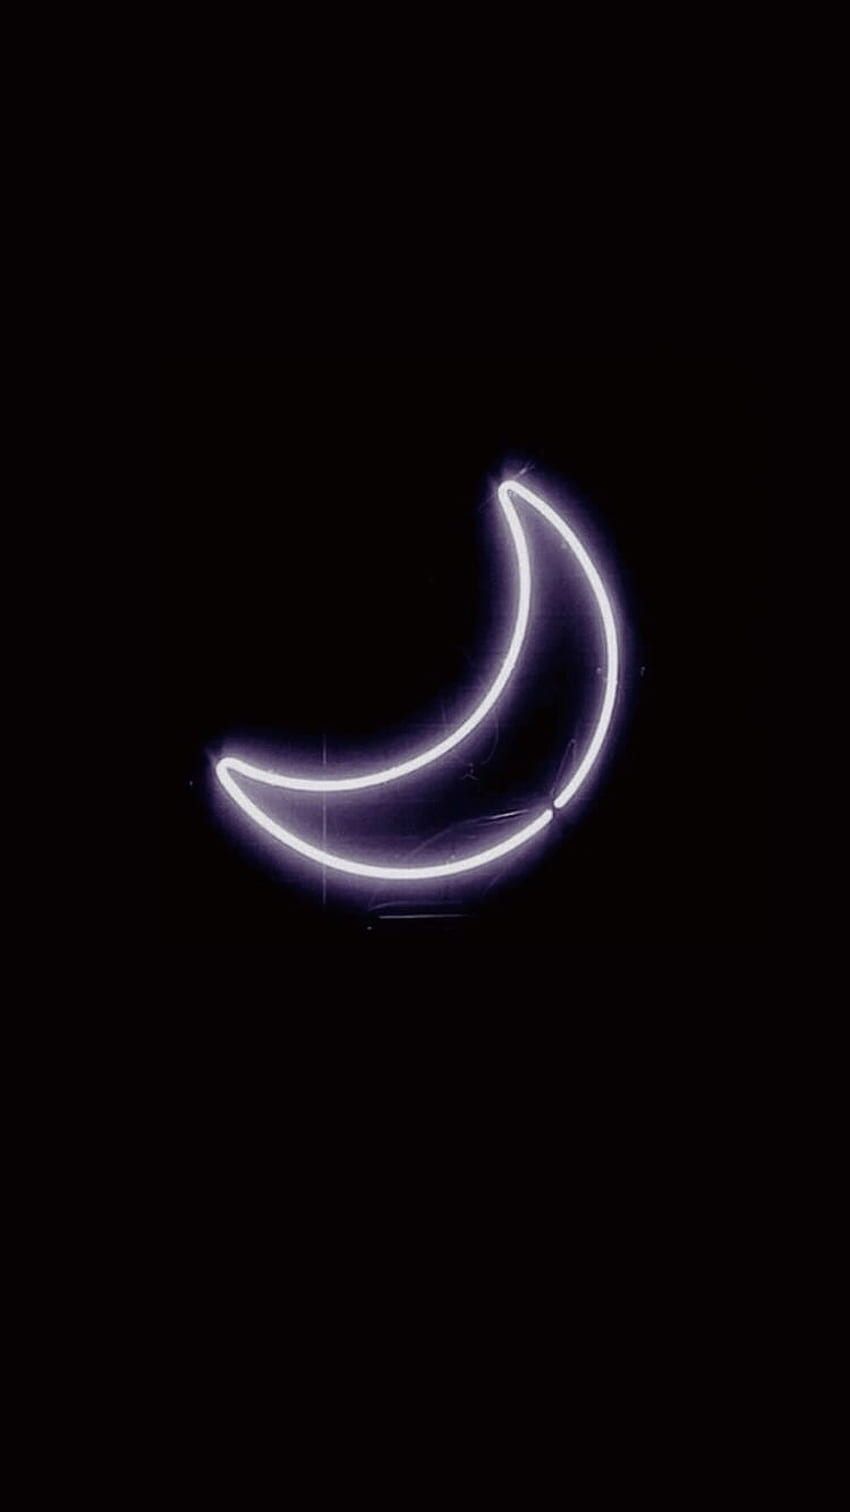 Aesthetic wallpaper purple neon moon on a black background - Moon